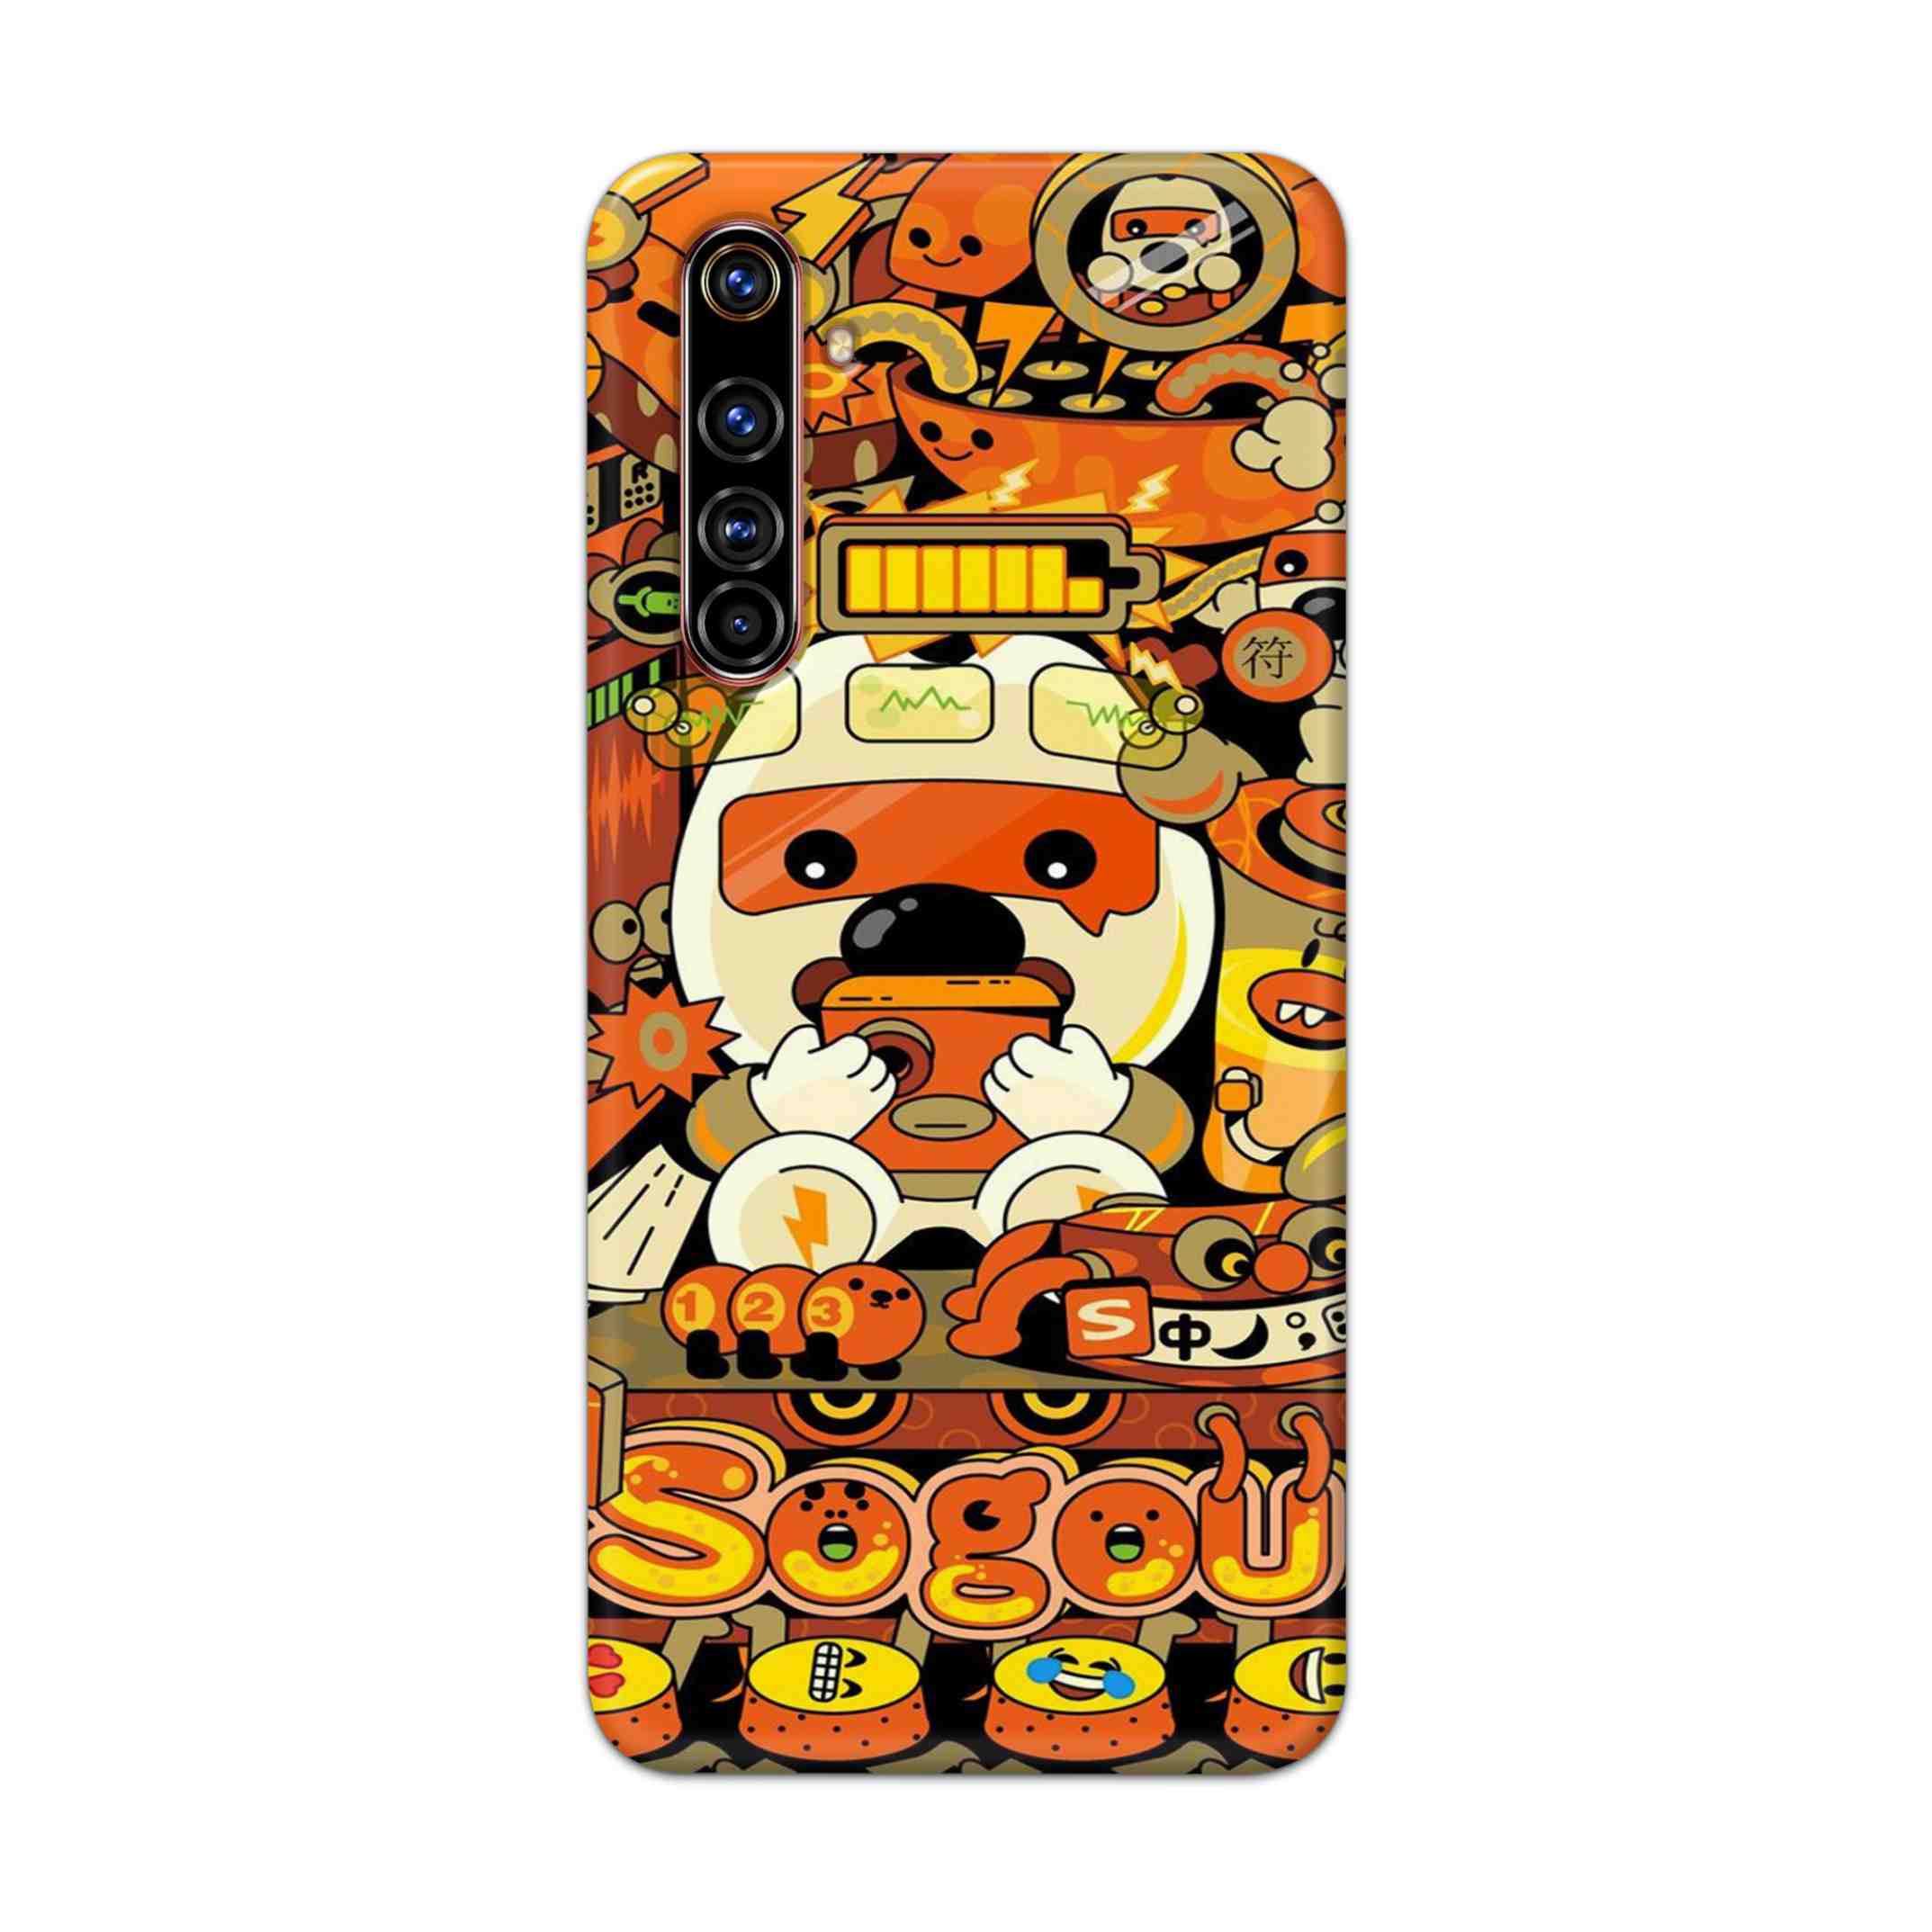 Buy Sogou Hard Back Mobile Phone Case Cover For Realme X50 Pro Online